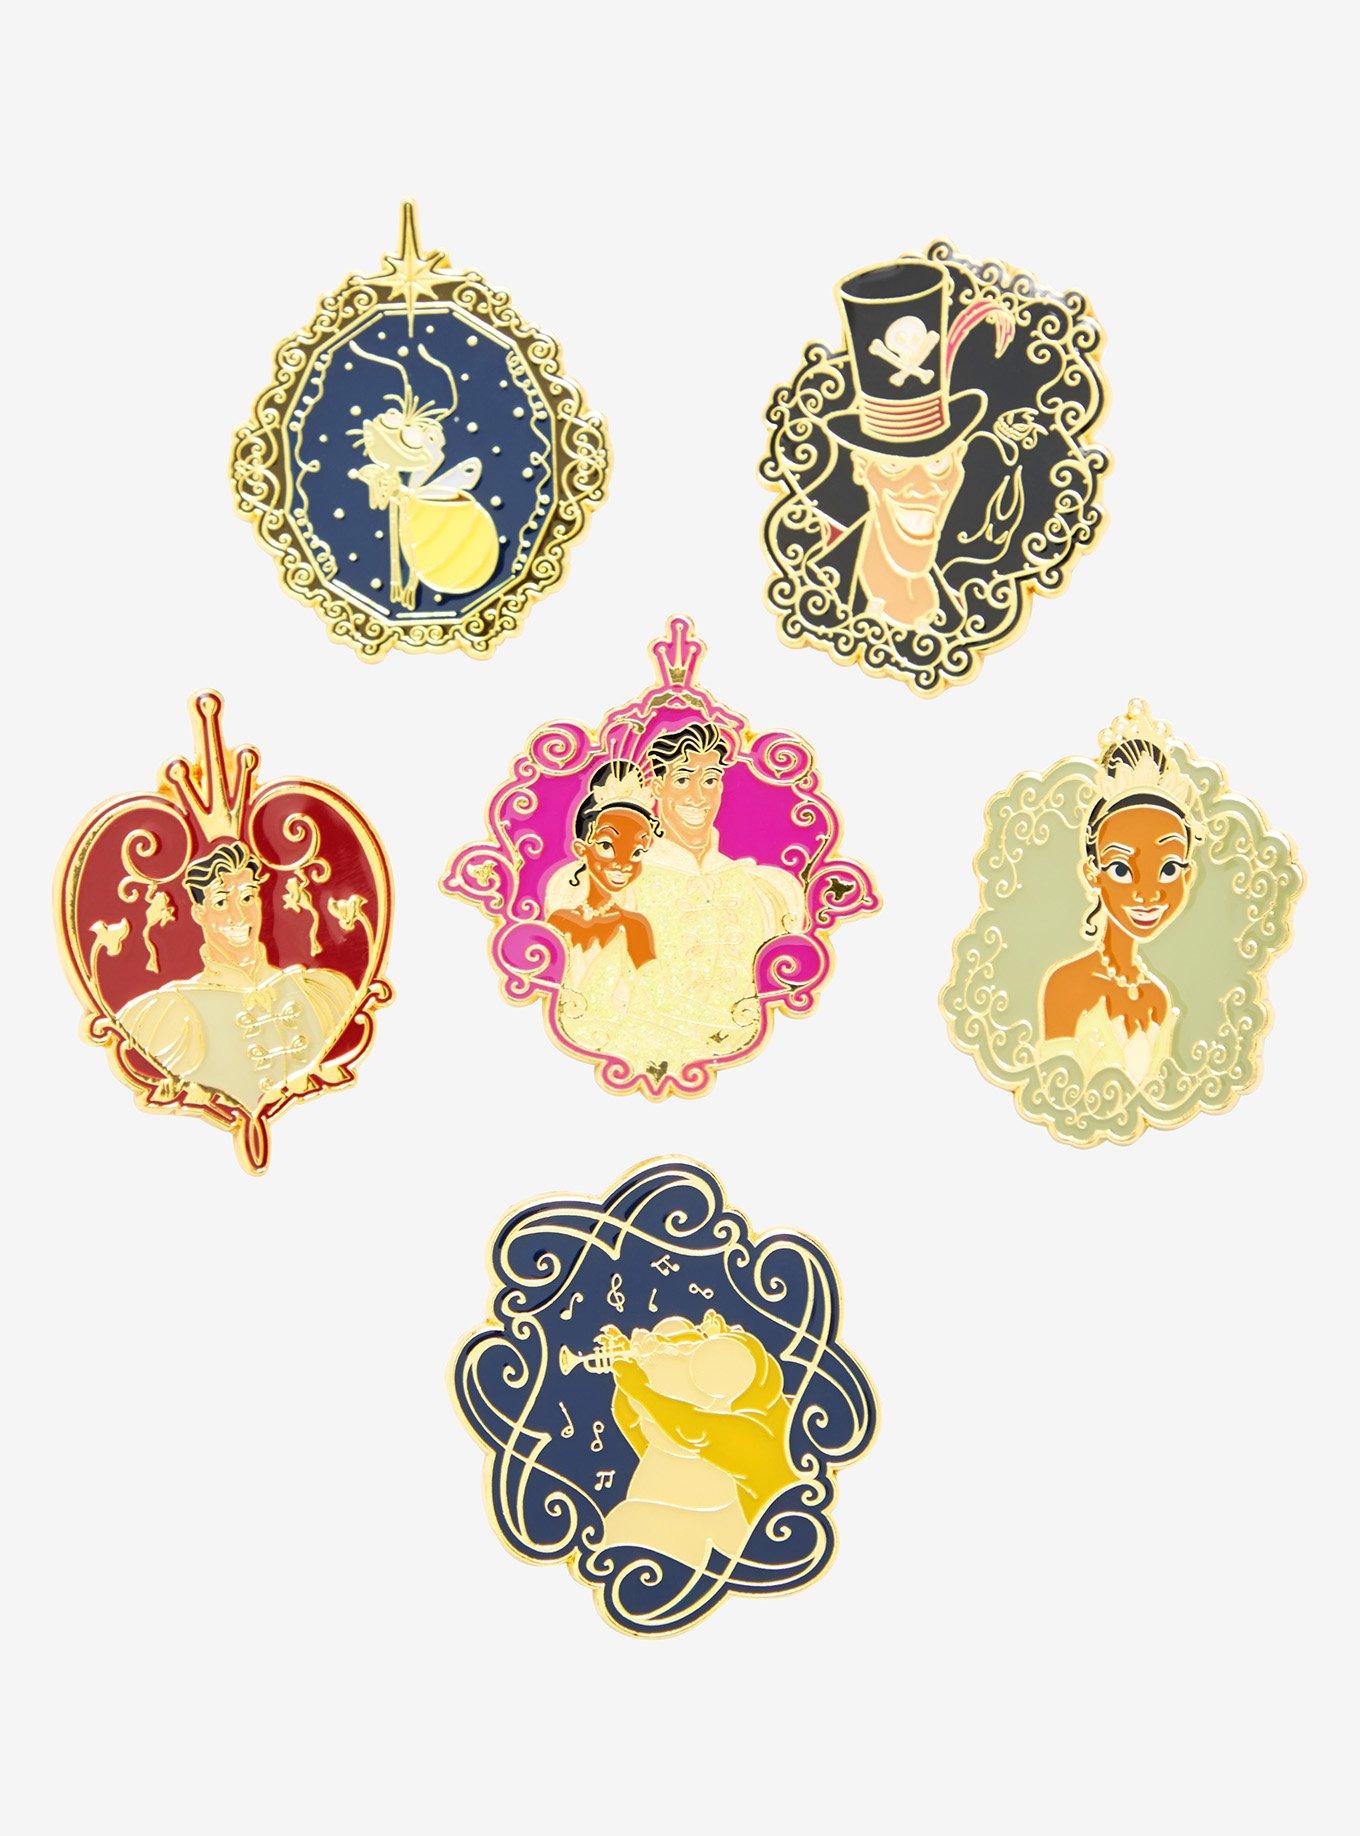 Tiana Princess & the Frog Embroidery Pin Trading Book Bag Disney Pin  Collection